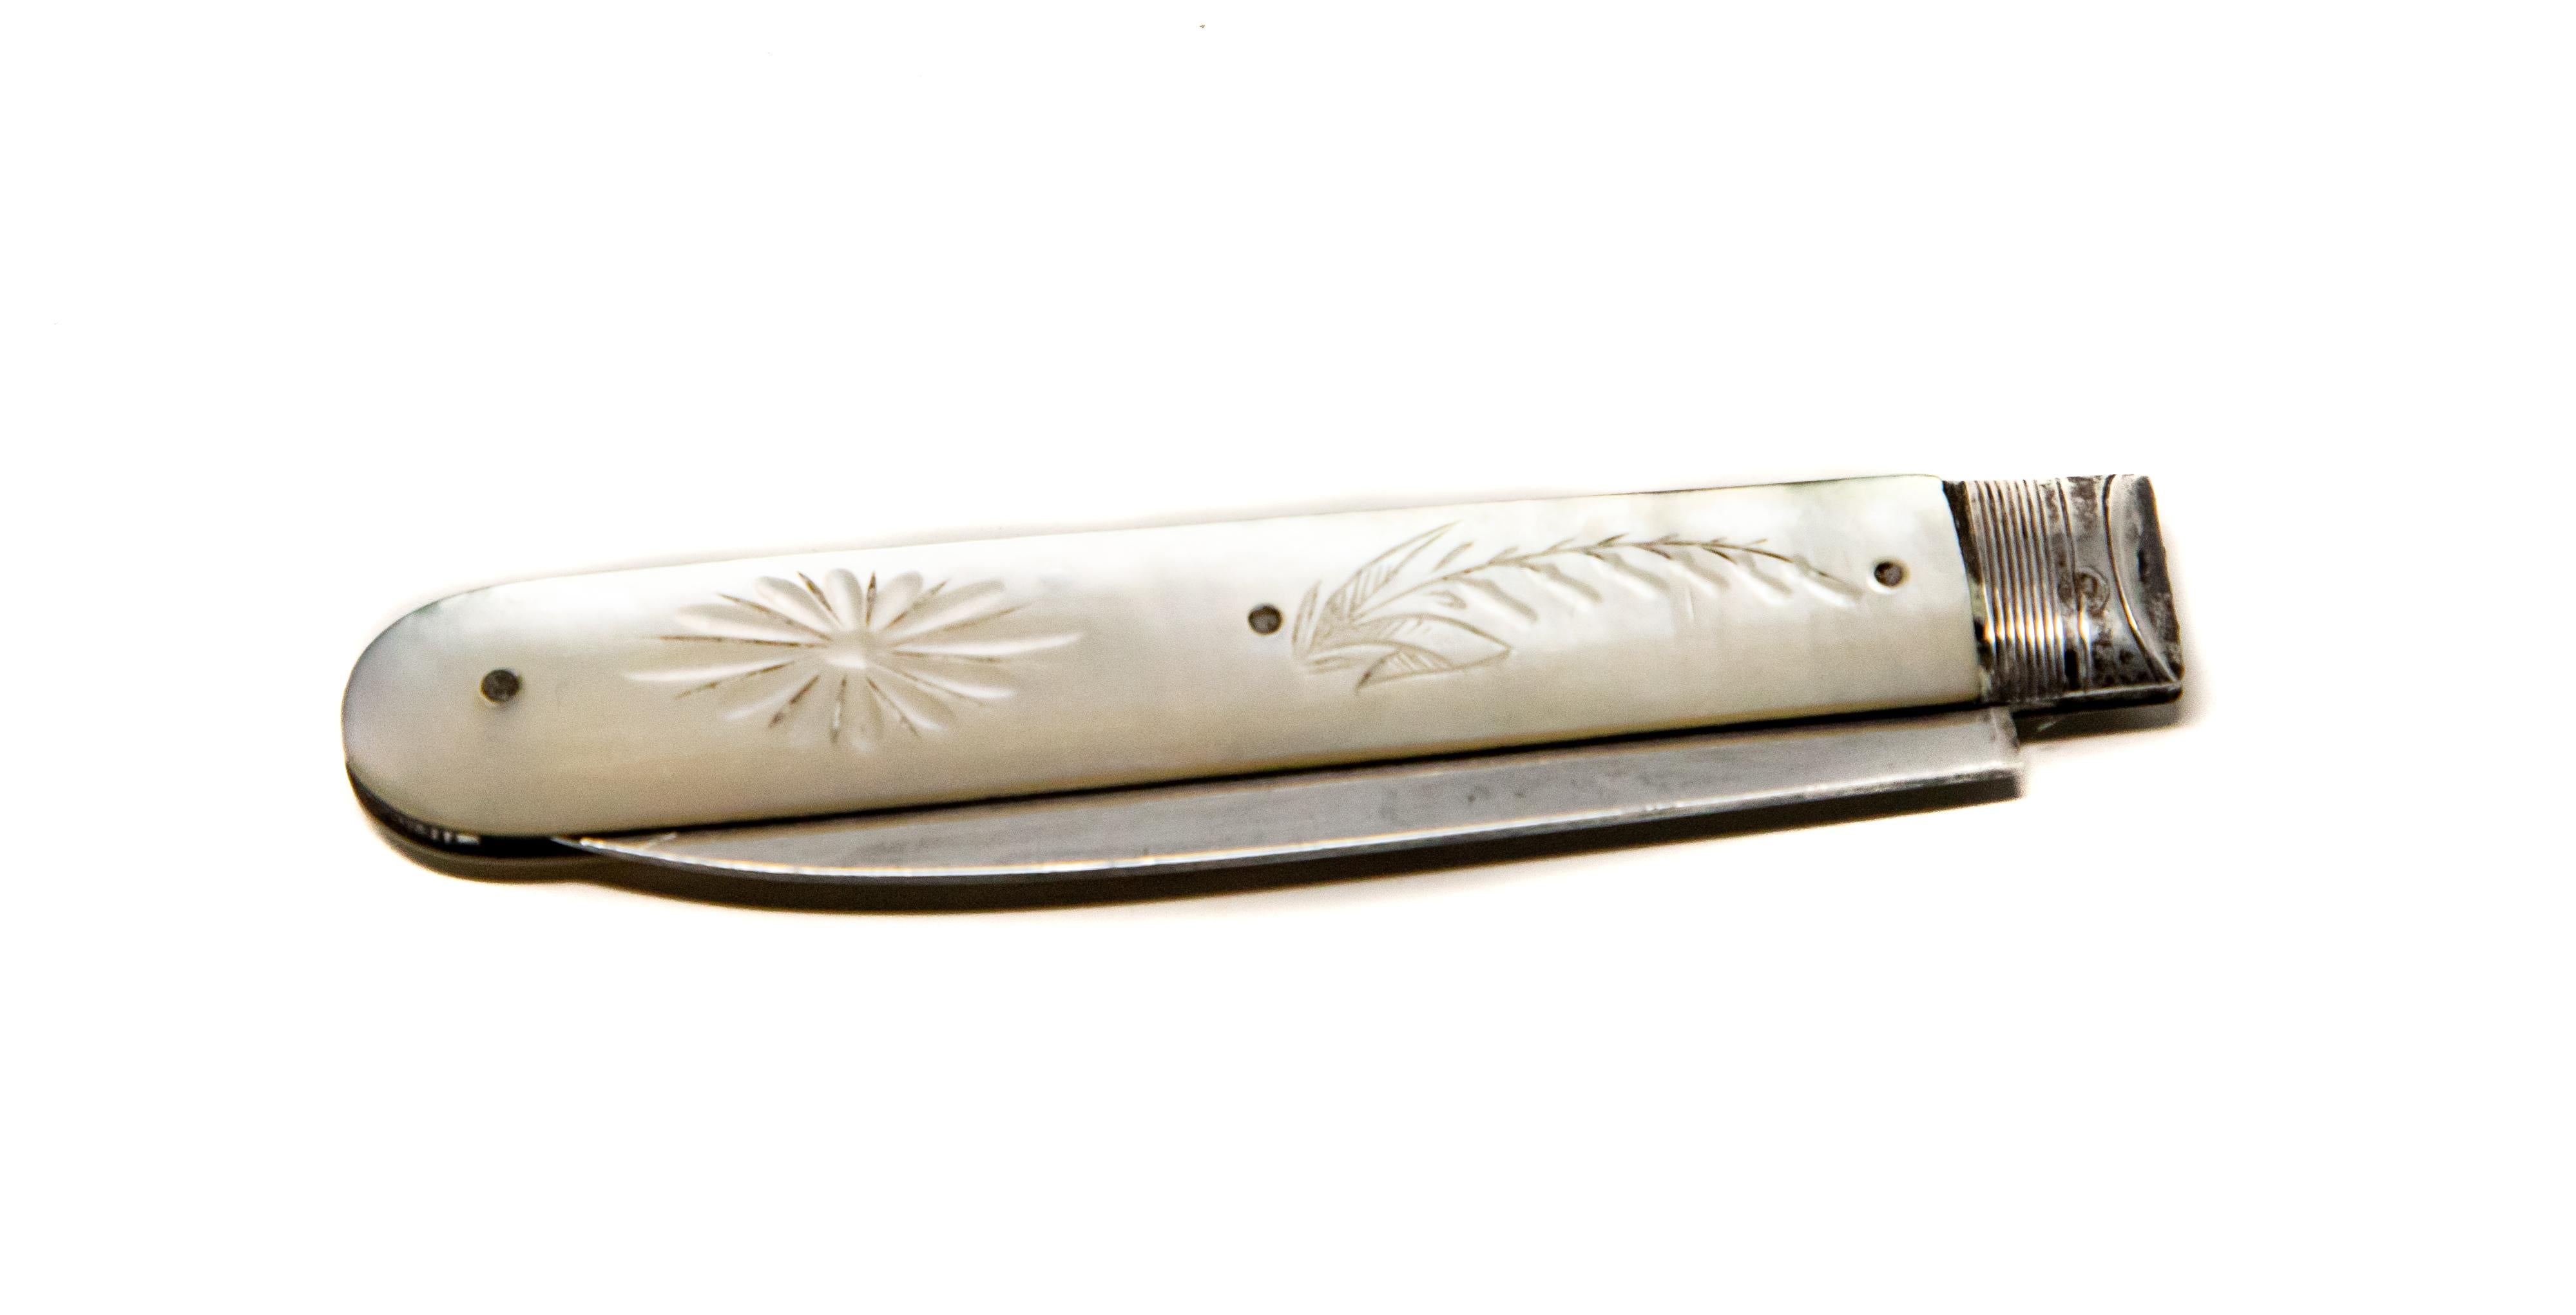 19th century pocket knife